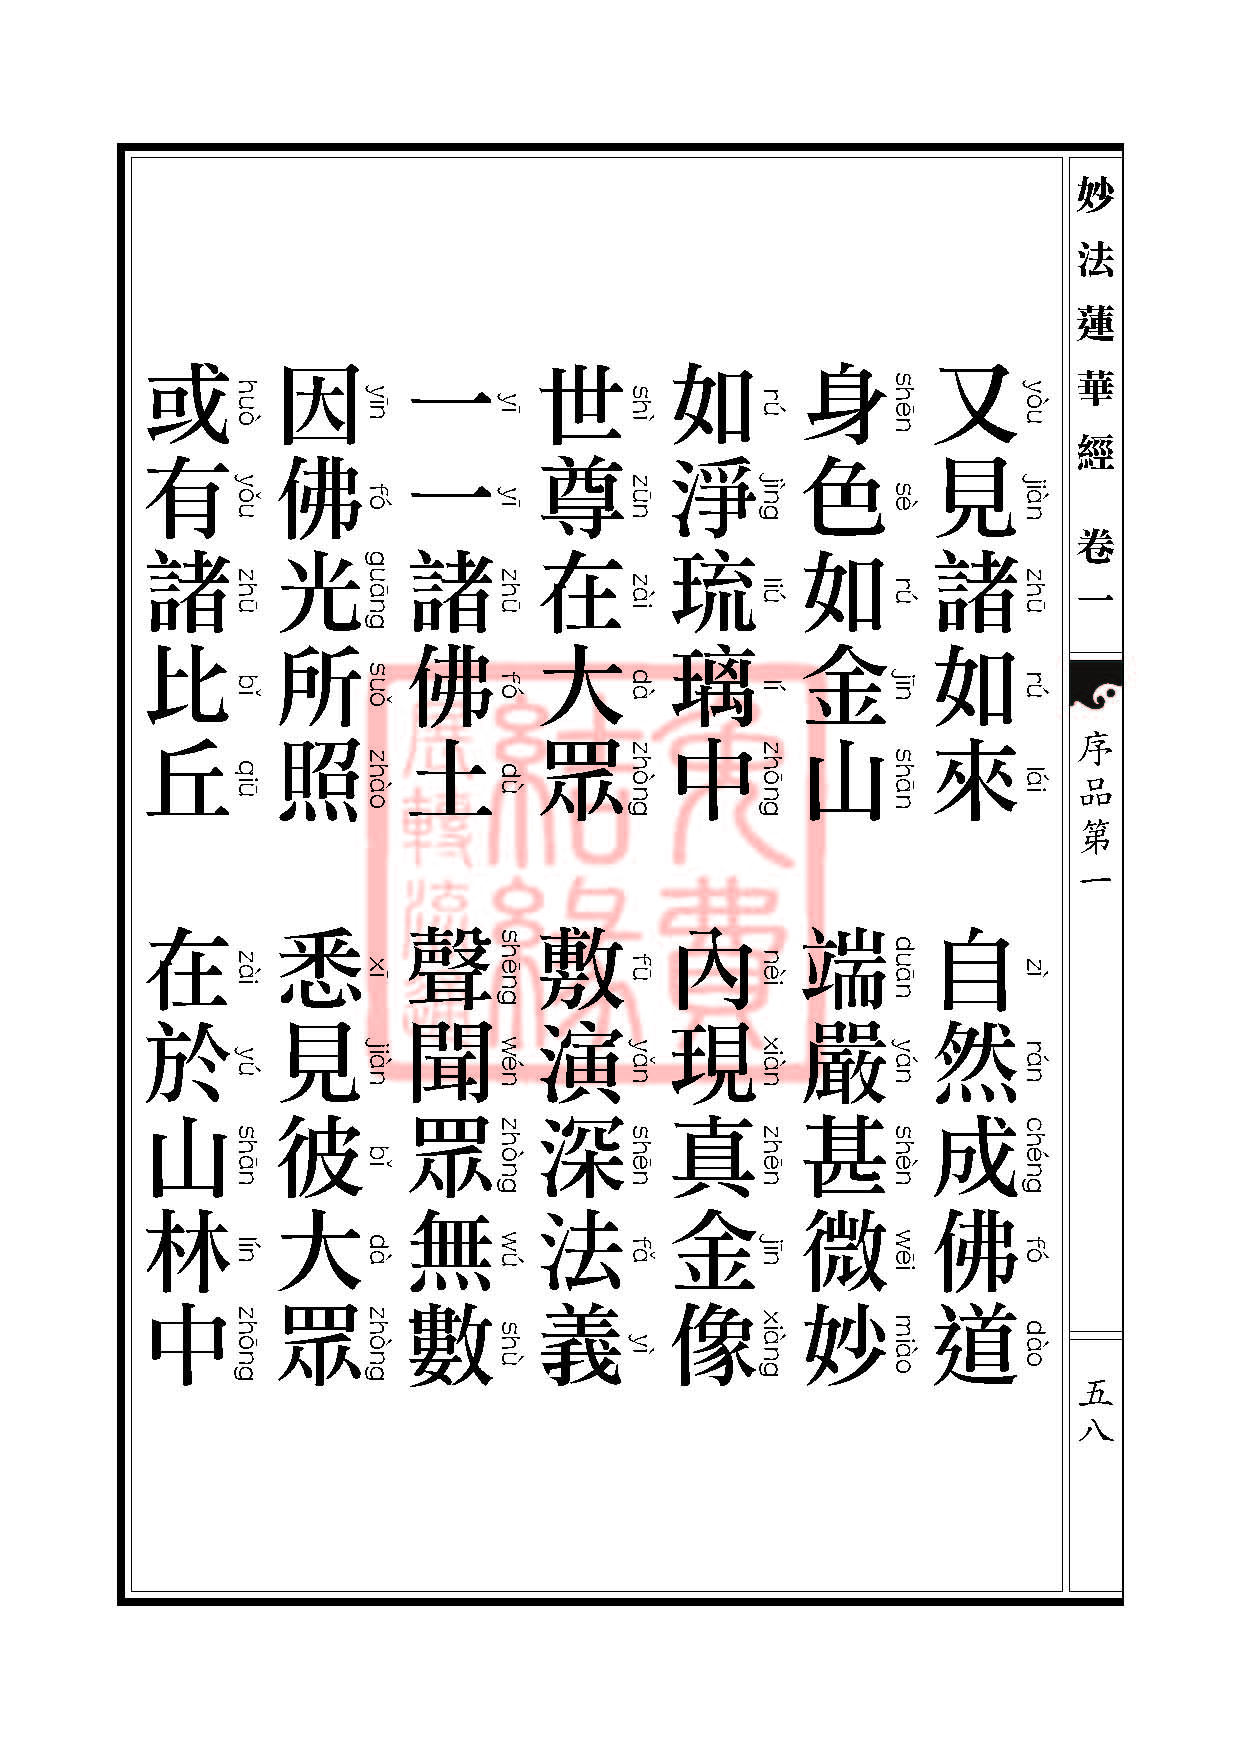 Book_FHJ_HK-A6-PY_Web_ҳ_058.jpg